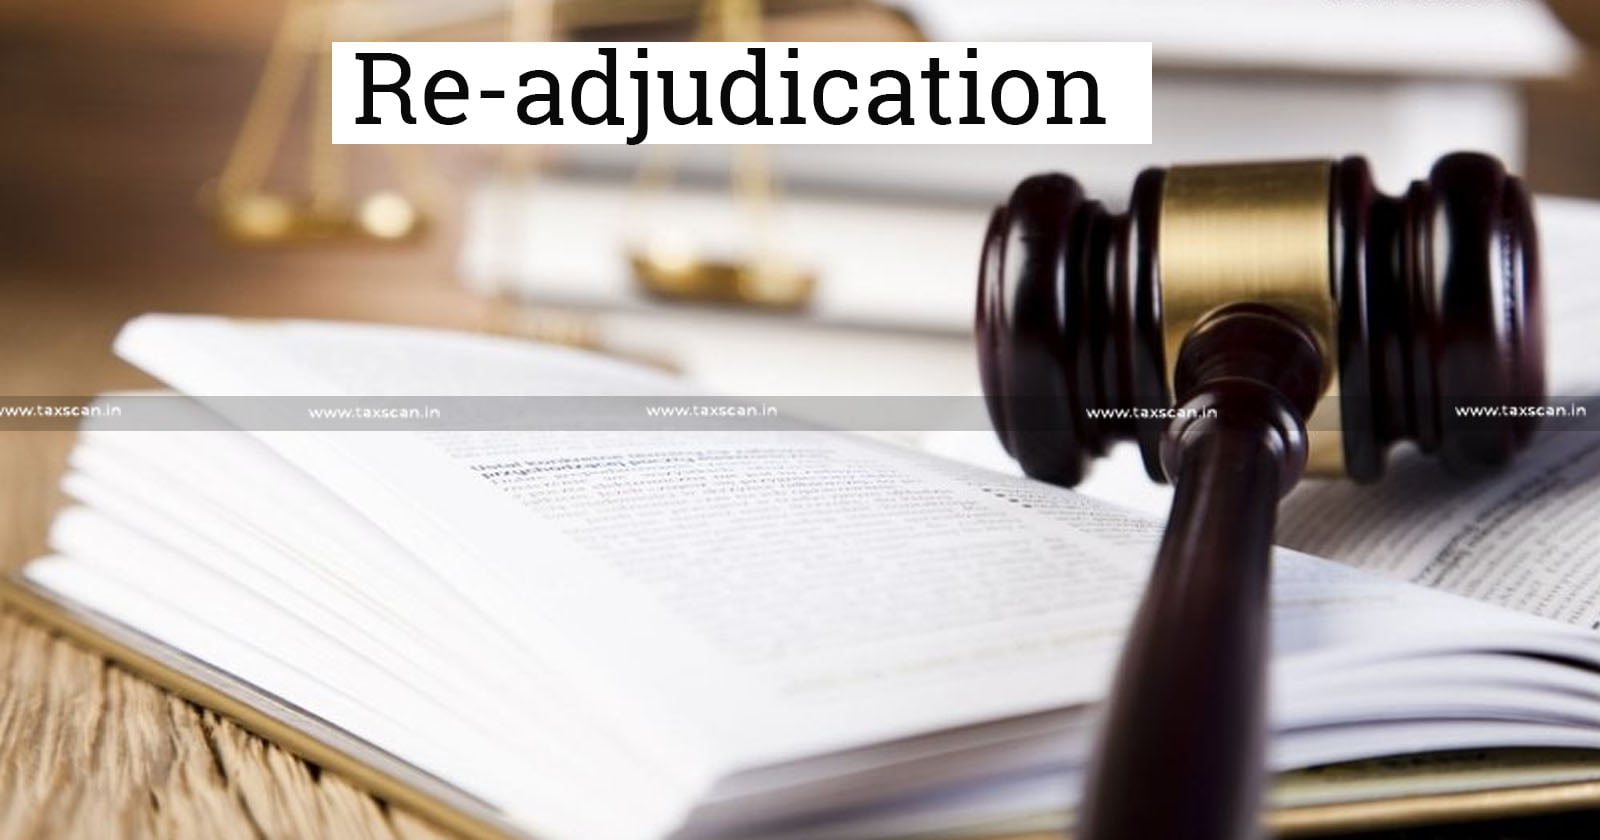 Rejection - Appeal - Dispute - CESTAT - CIT (A) - Re-adjudication - cestat - taxscan